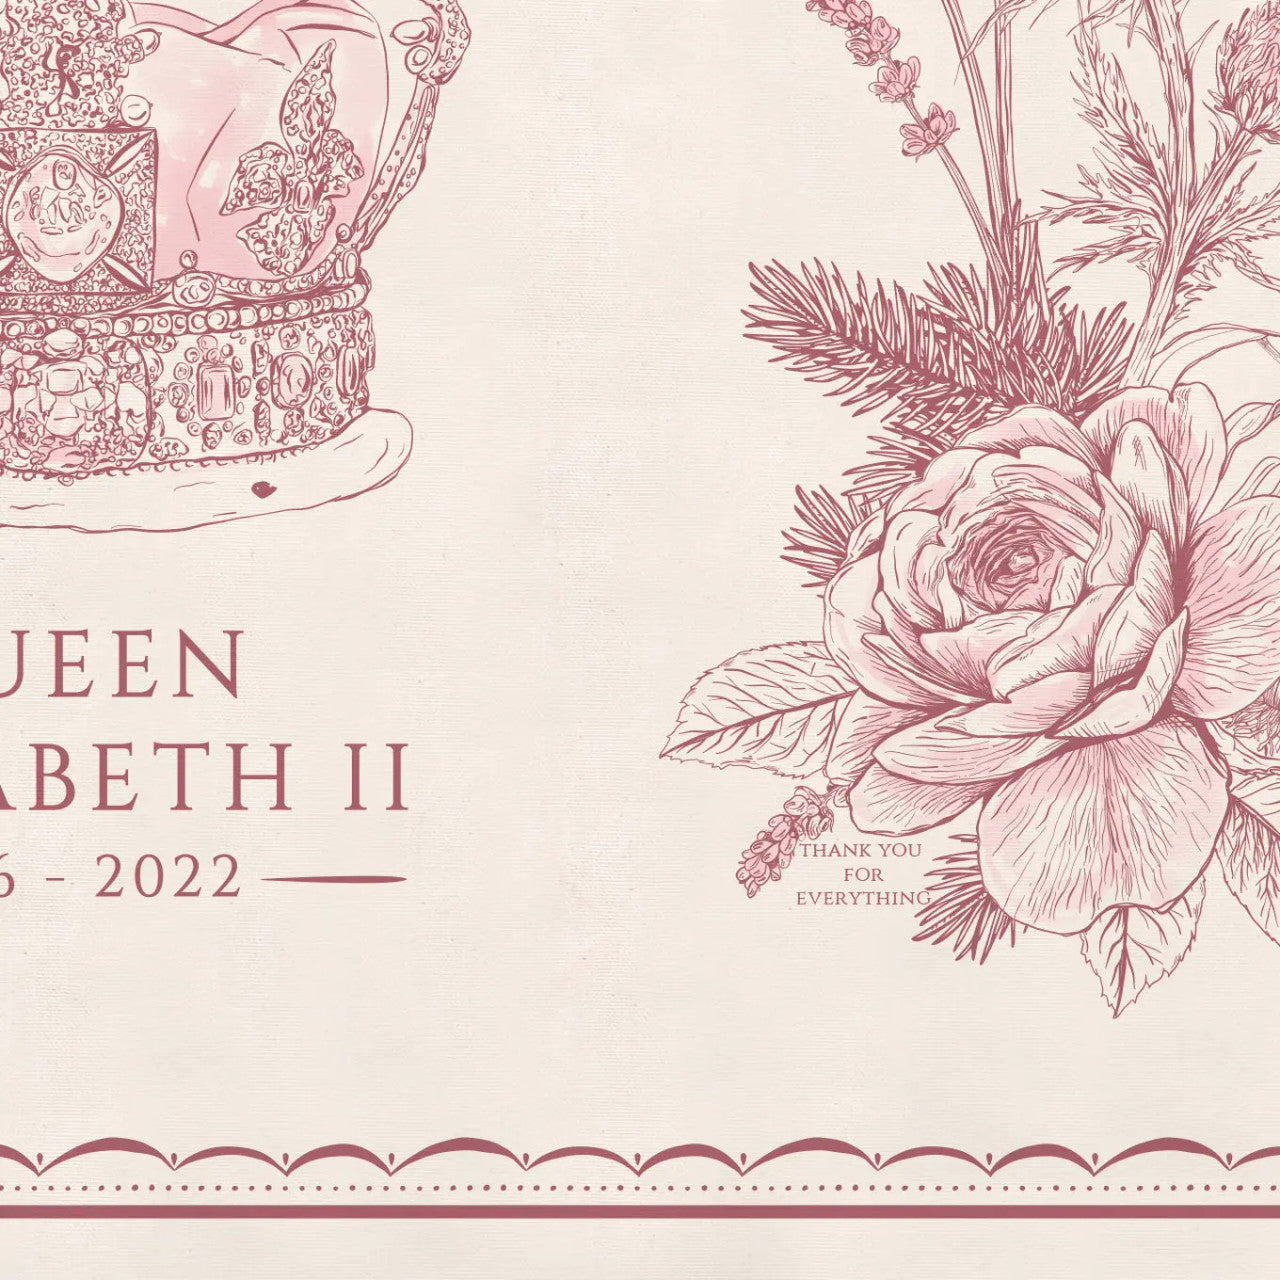 Queen Elizabeth II Commemorative Tea Towel by Victoria Eggs